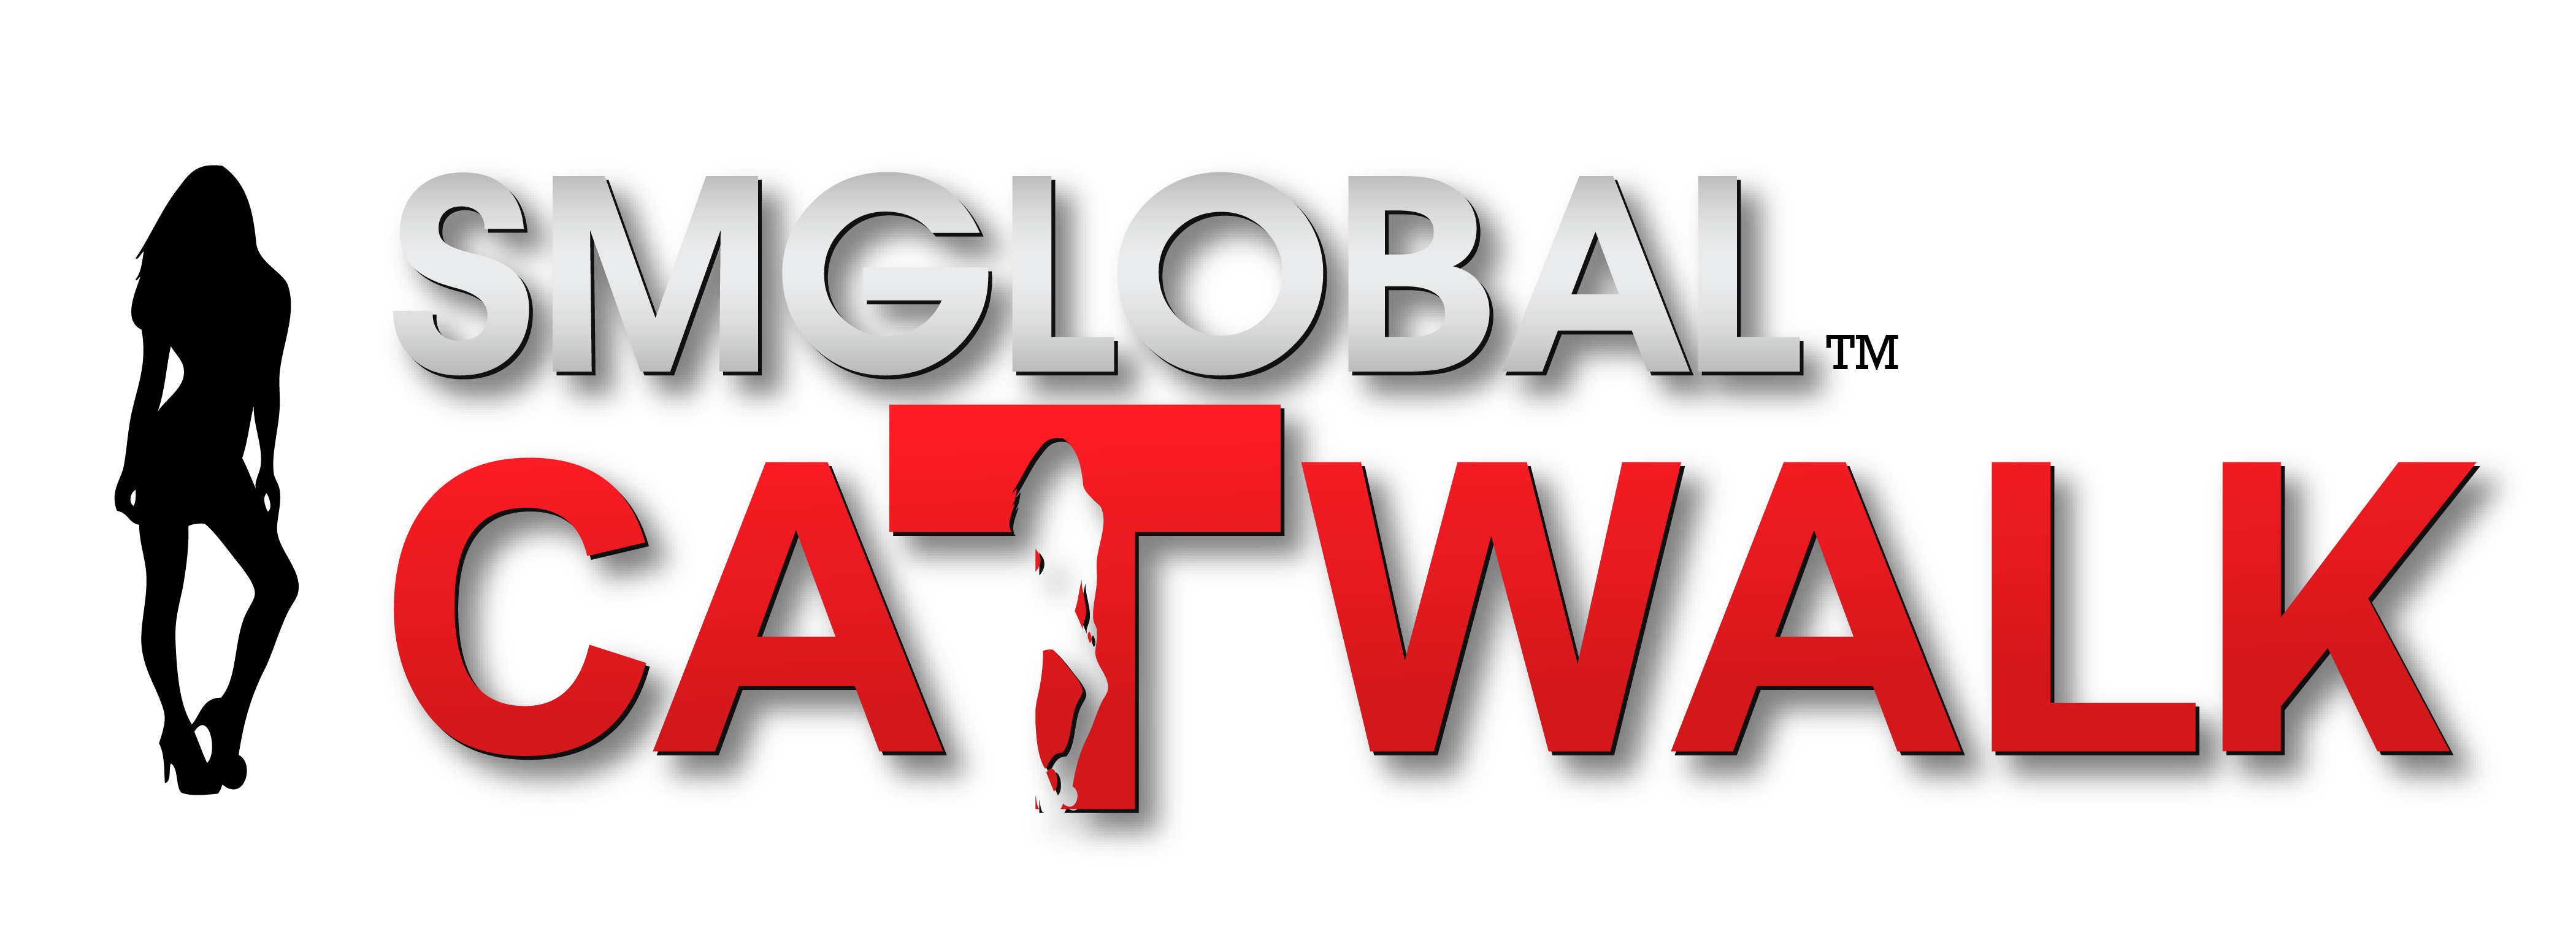 SMGlobal Catwalk